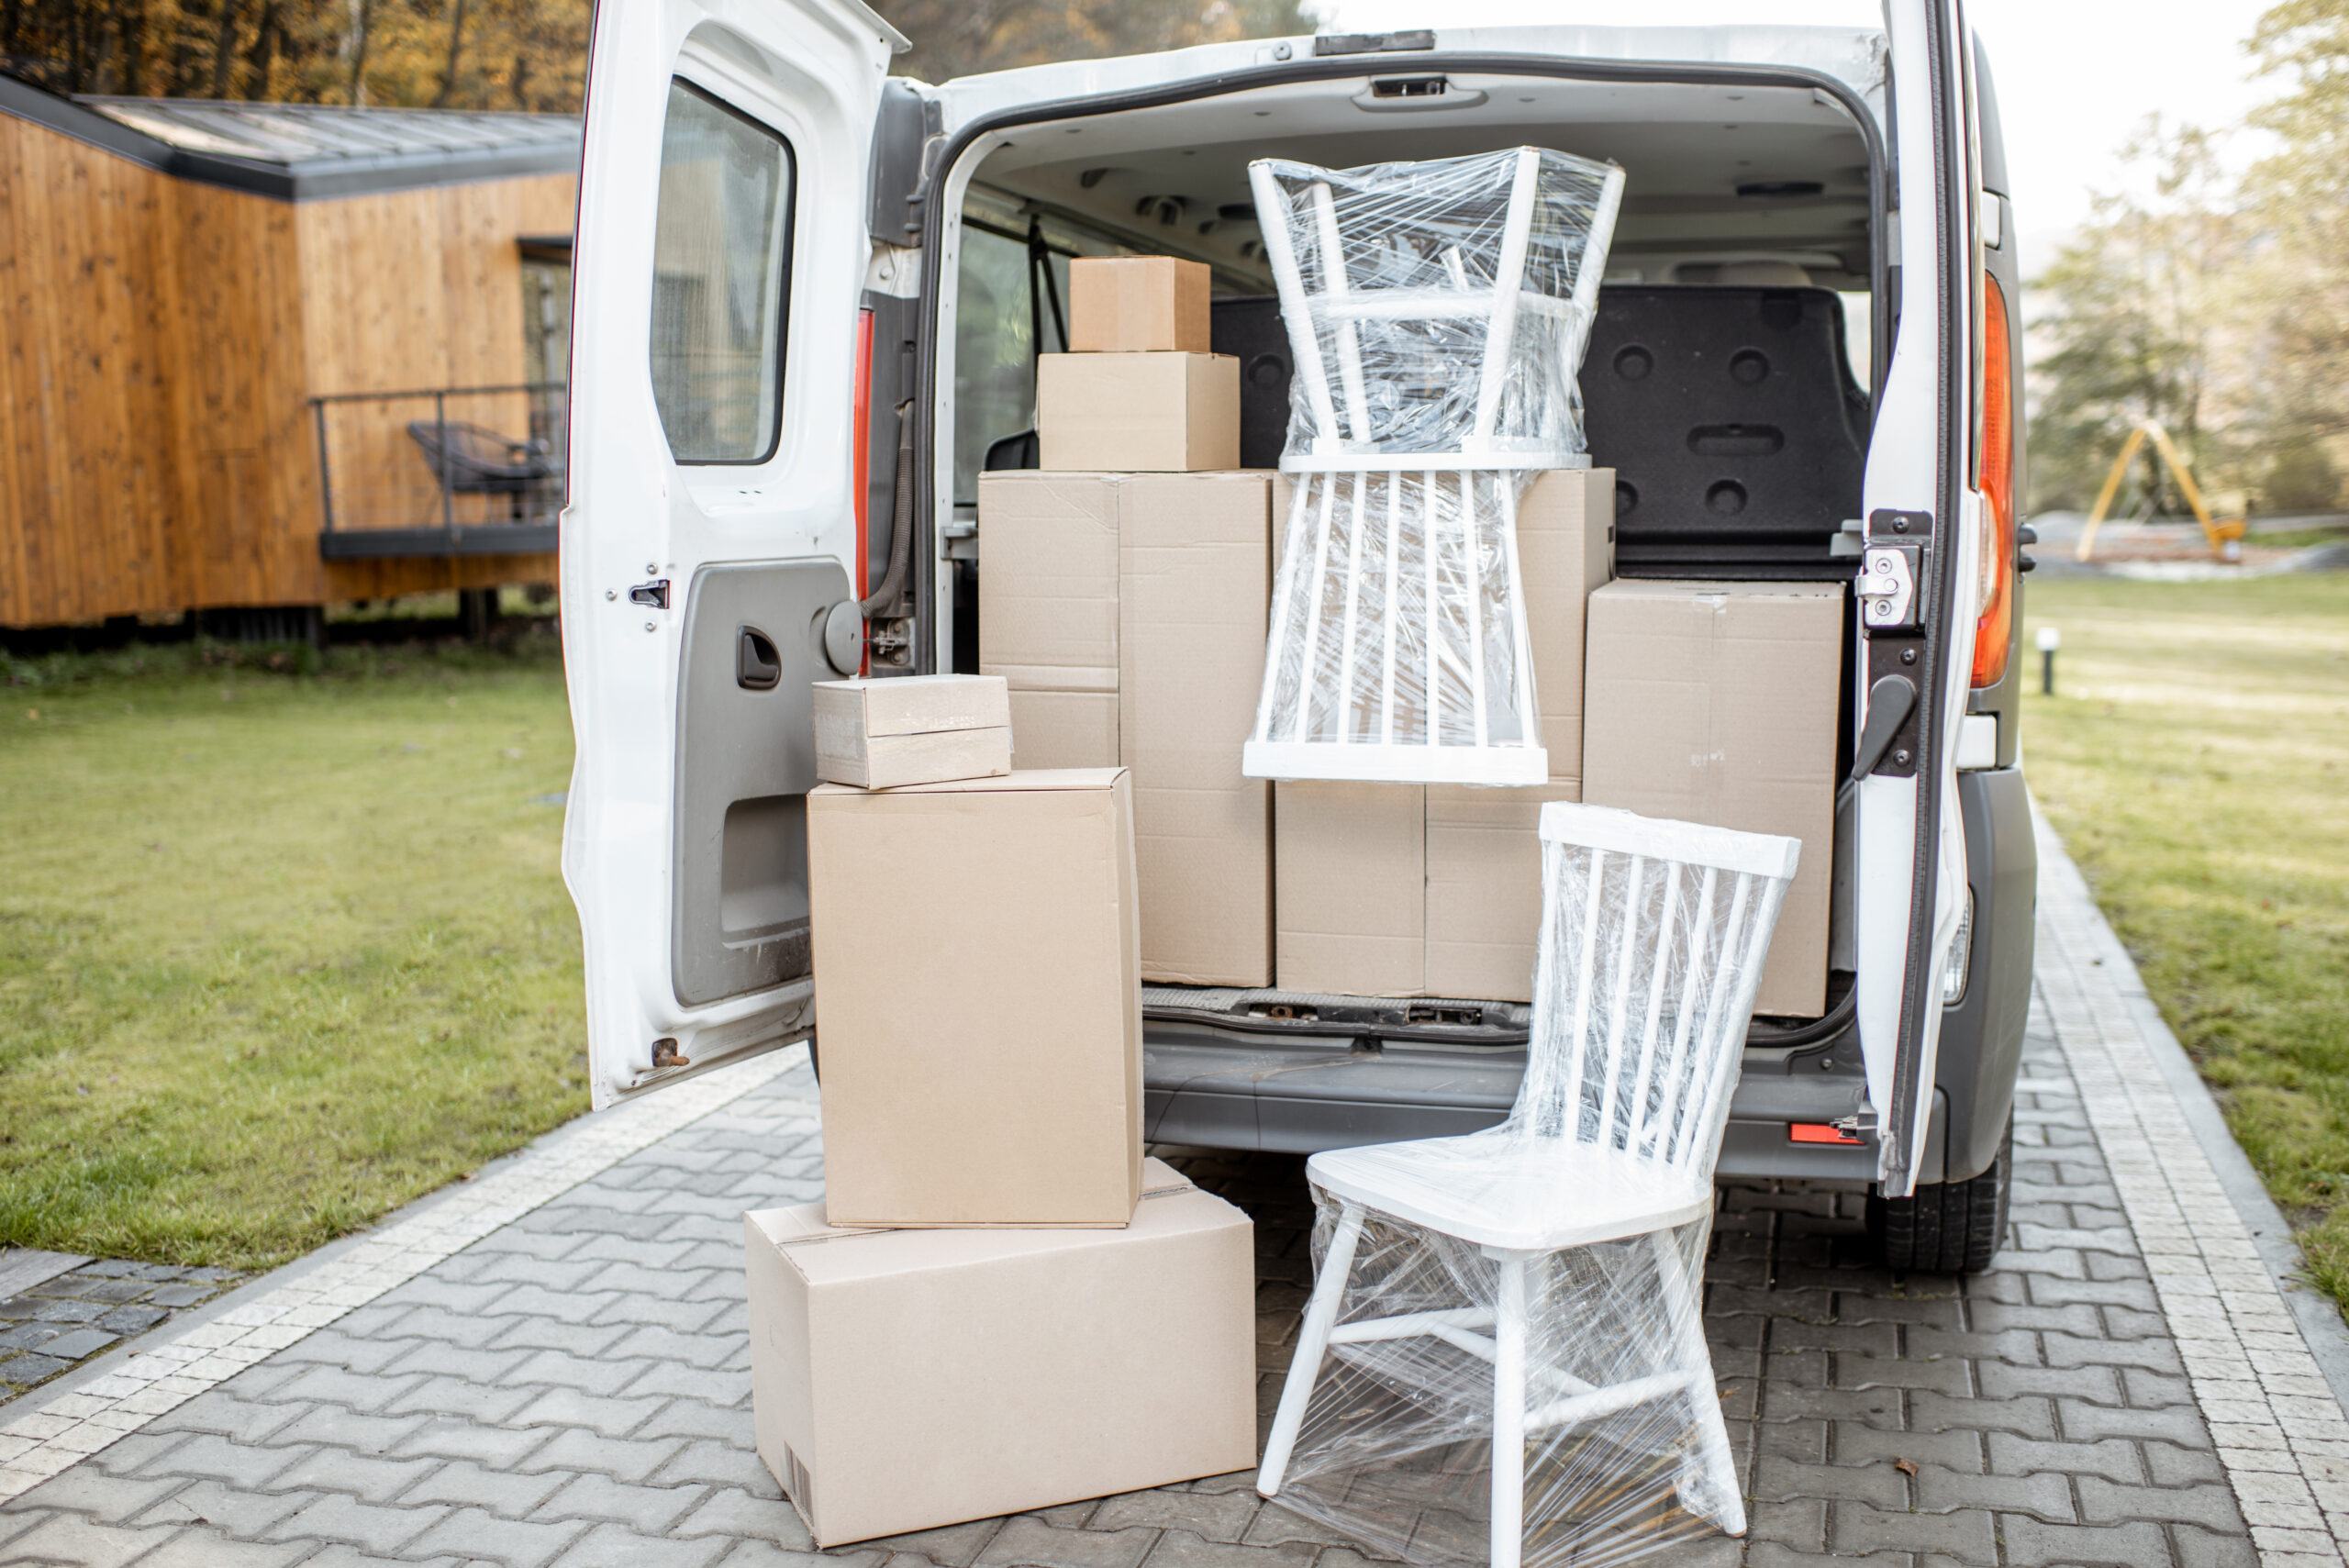 Delivery van unloading furniture